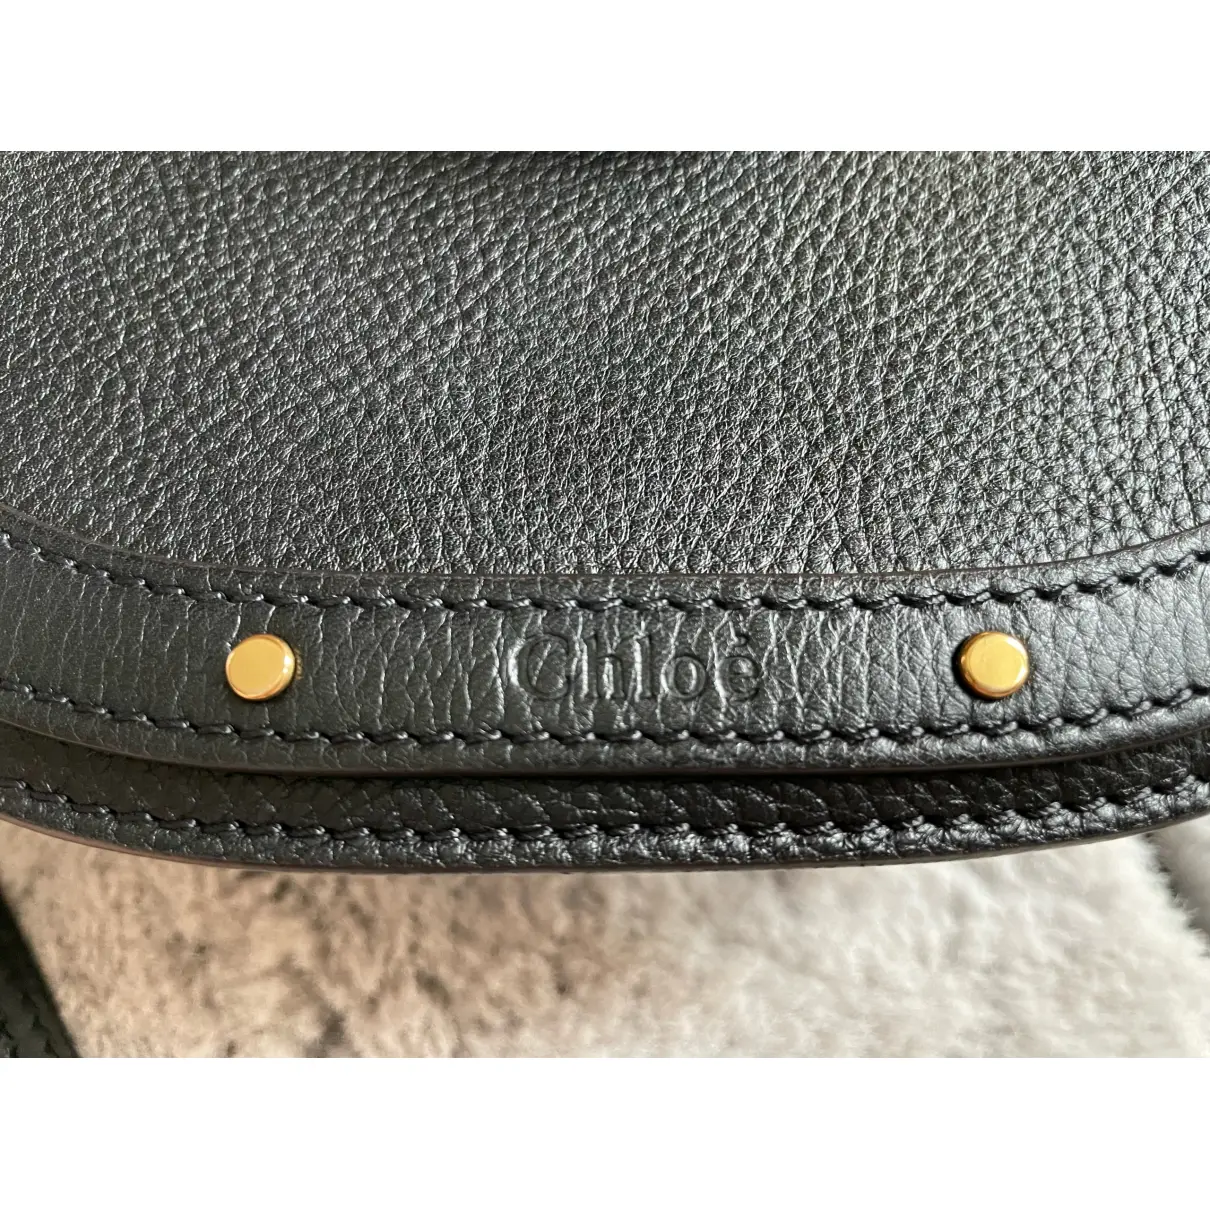 Bracelet Nile leather handbag Chloé